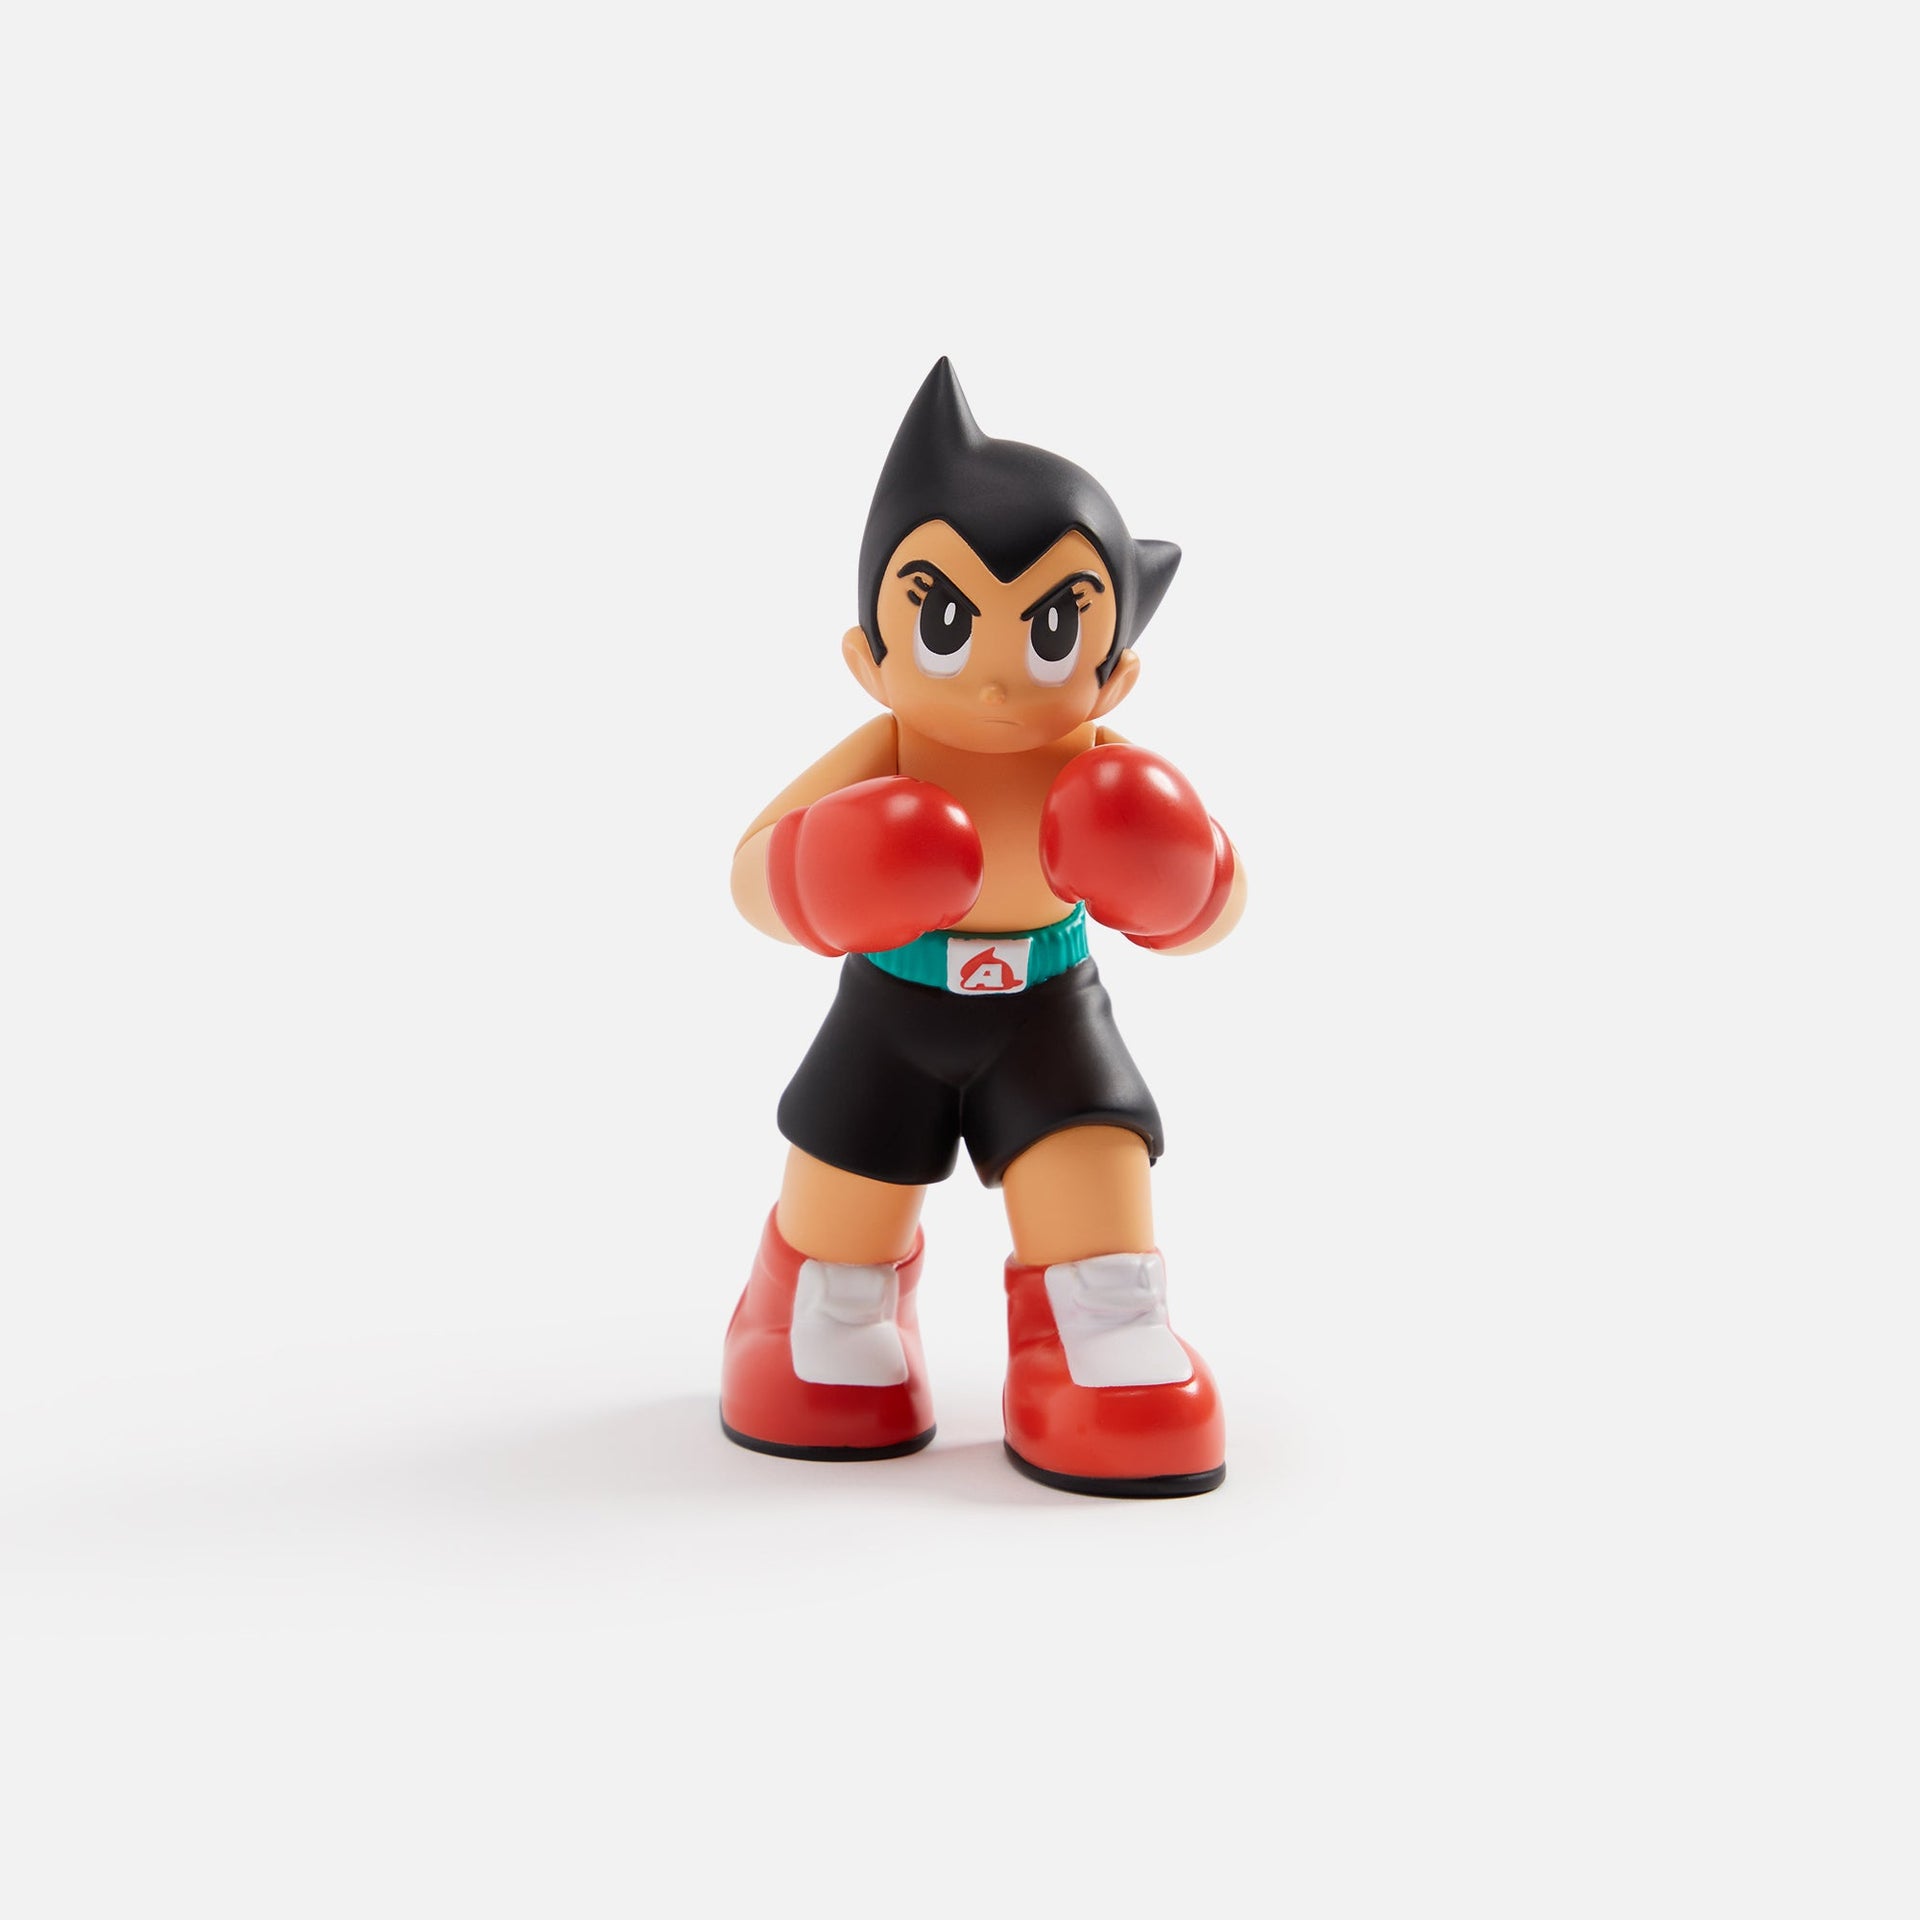 Toyqube 6" Astro Boy Boxer OG - Classic Red / Black / Green